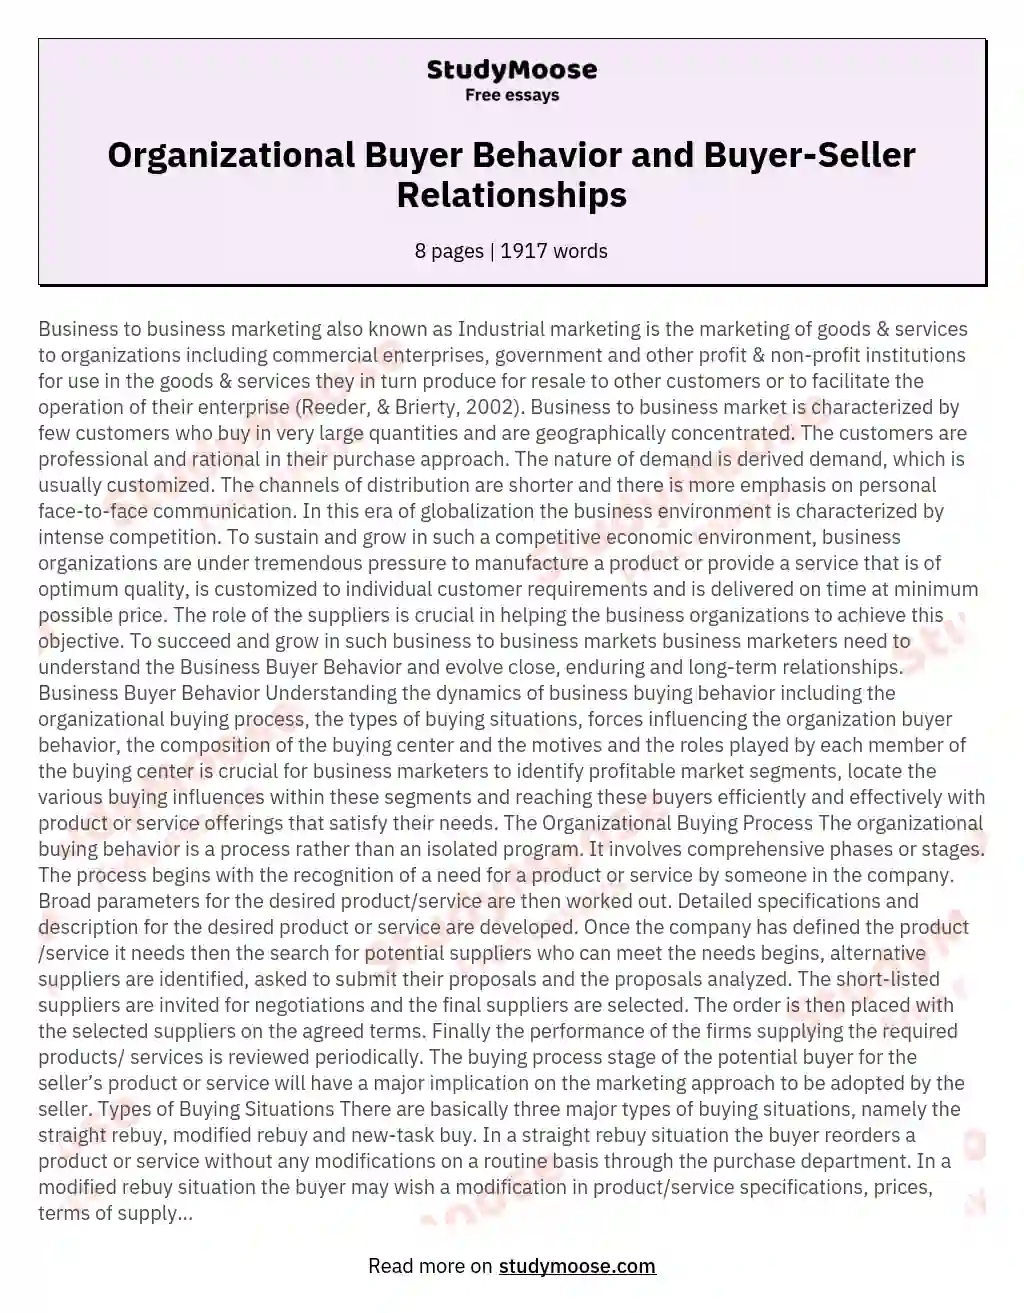 Organizational Buyer Behavior and Buyer-Seller Relationships essay